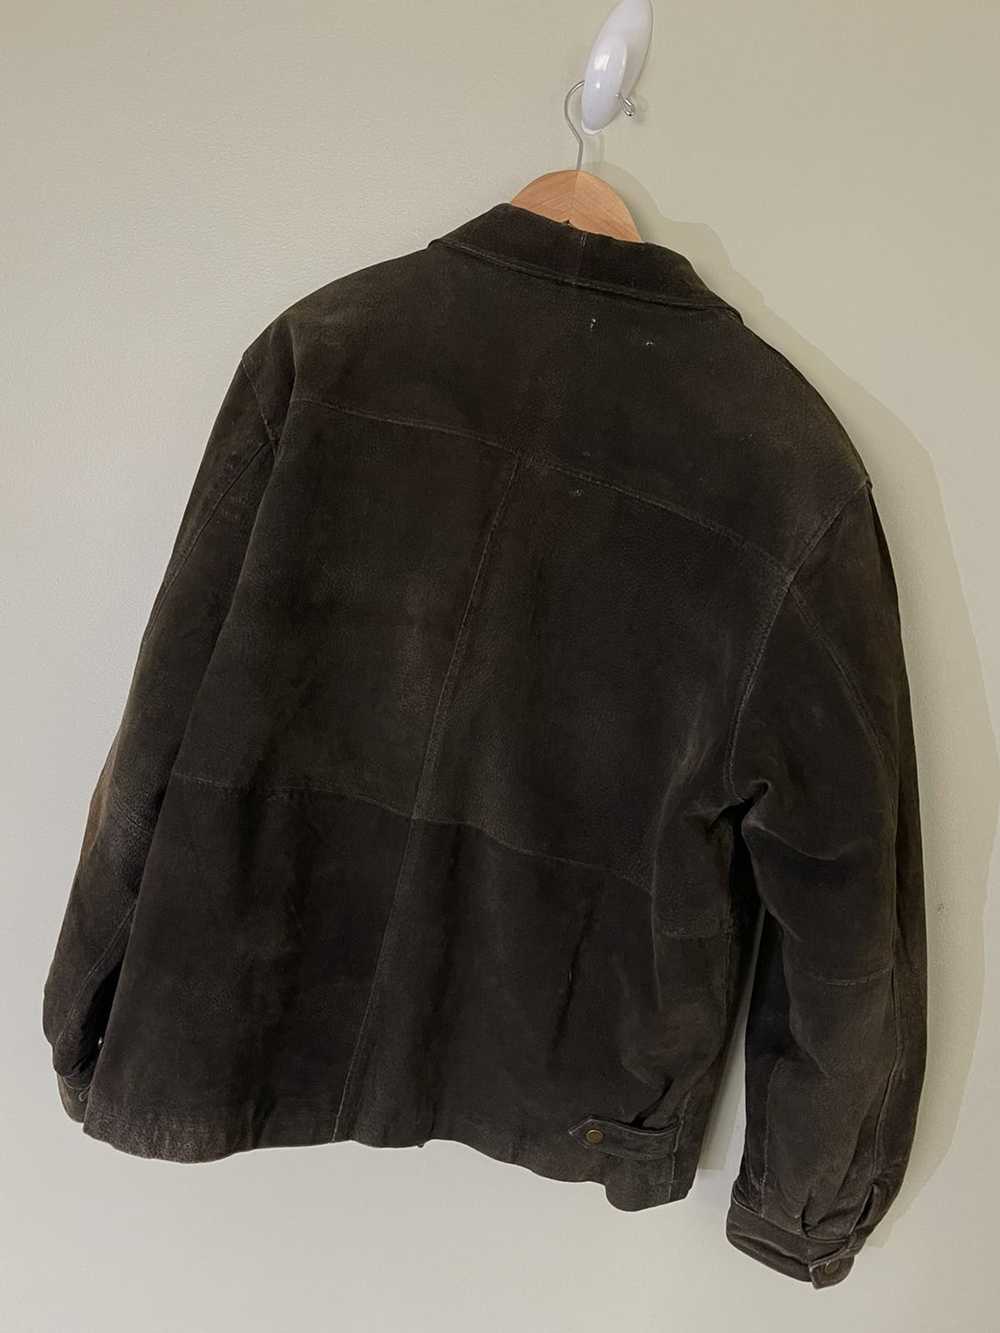 Vintage Wilda Distressed Leather Bomber Jacket - image 5